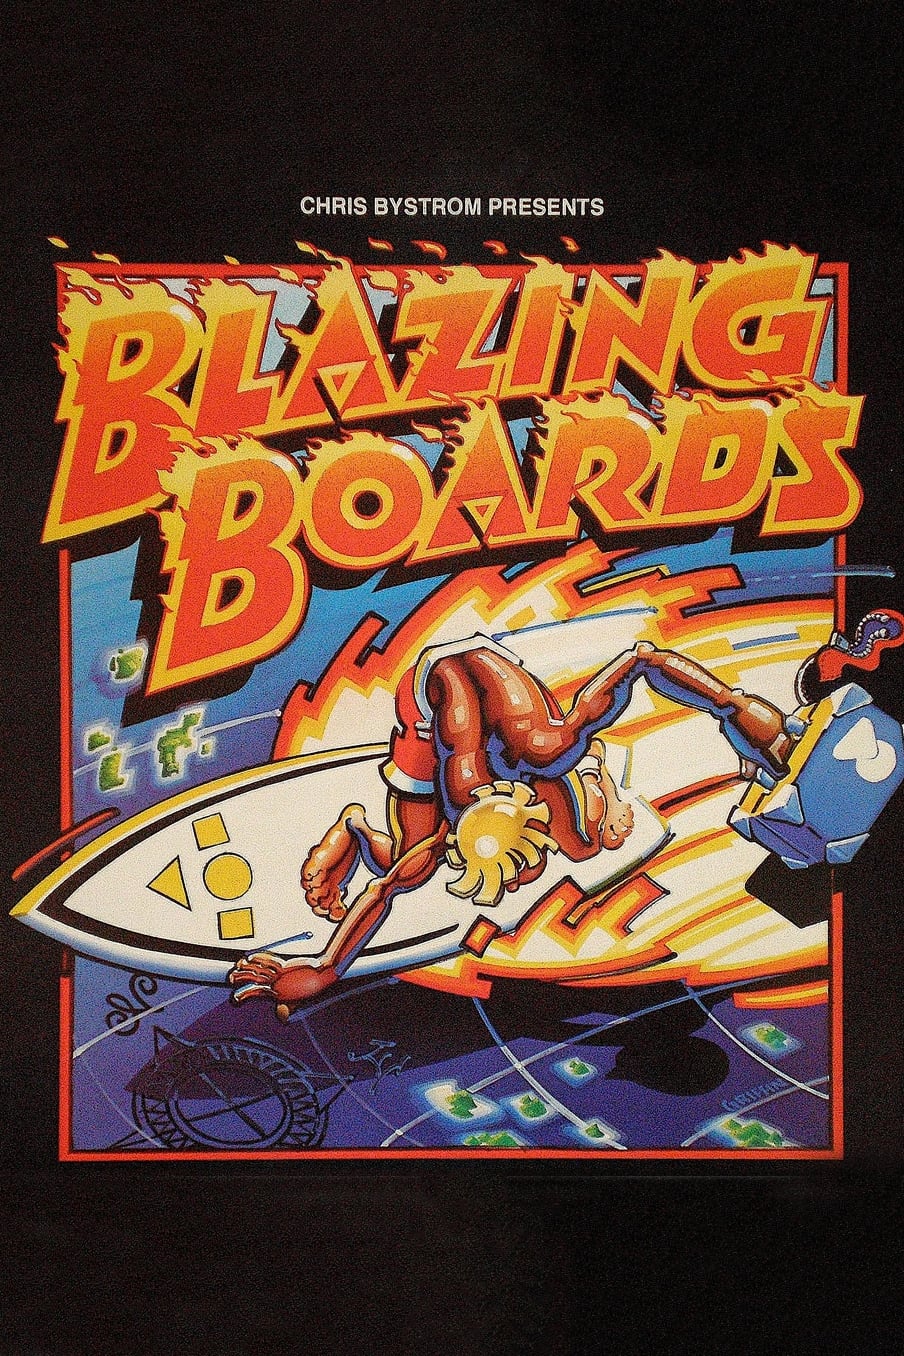 Blazing Boards